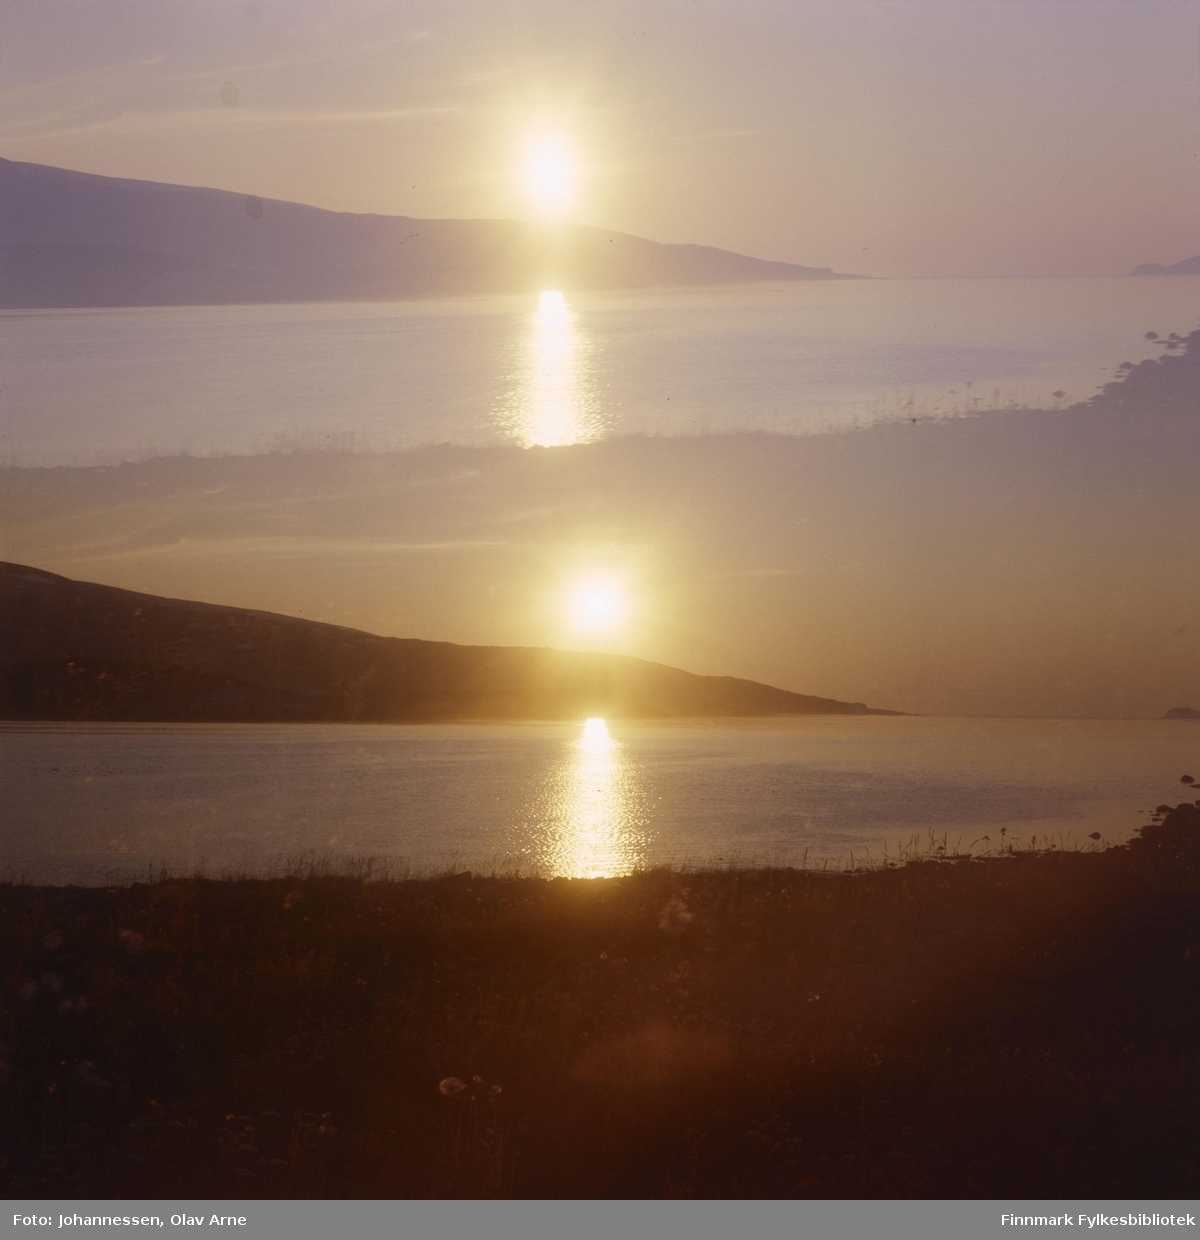 Dobbeleksponert landskapsfoto

Foto av Båtfjorden med Skrånes odden midt i bildet

Foto trolig tatt på 1960/70-tallet